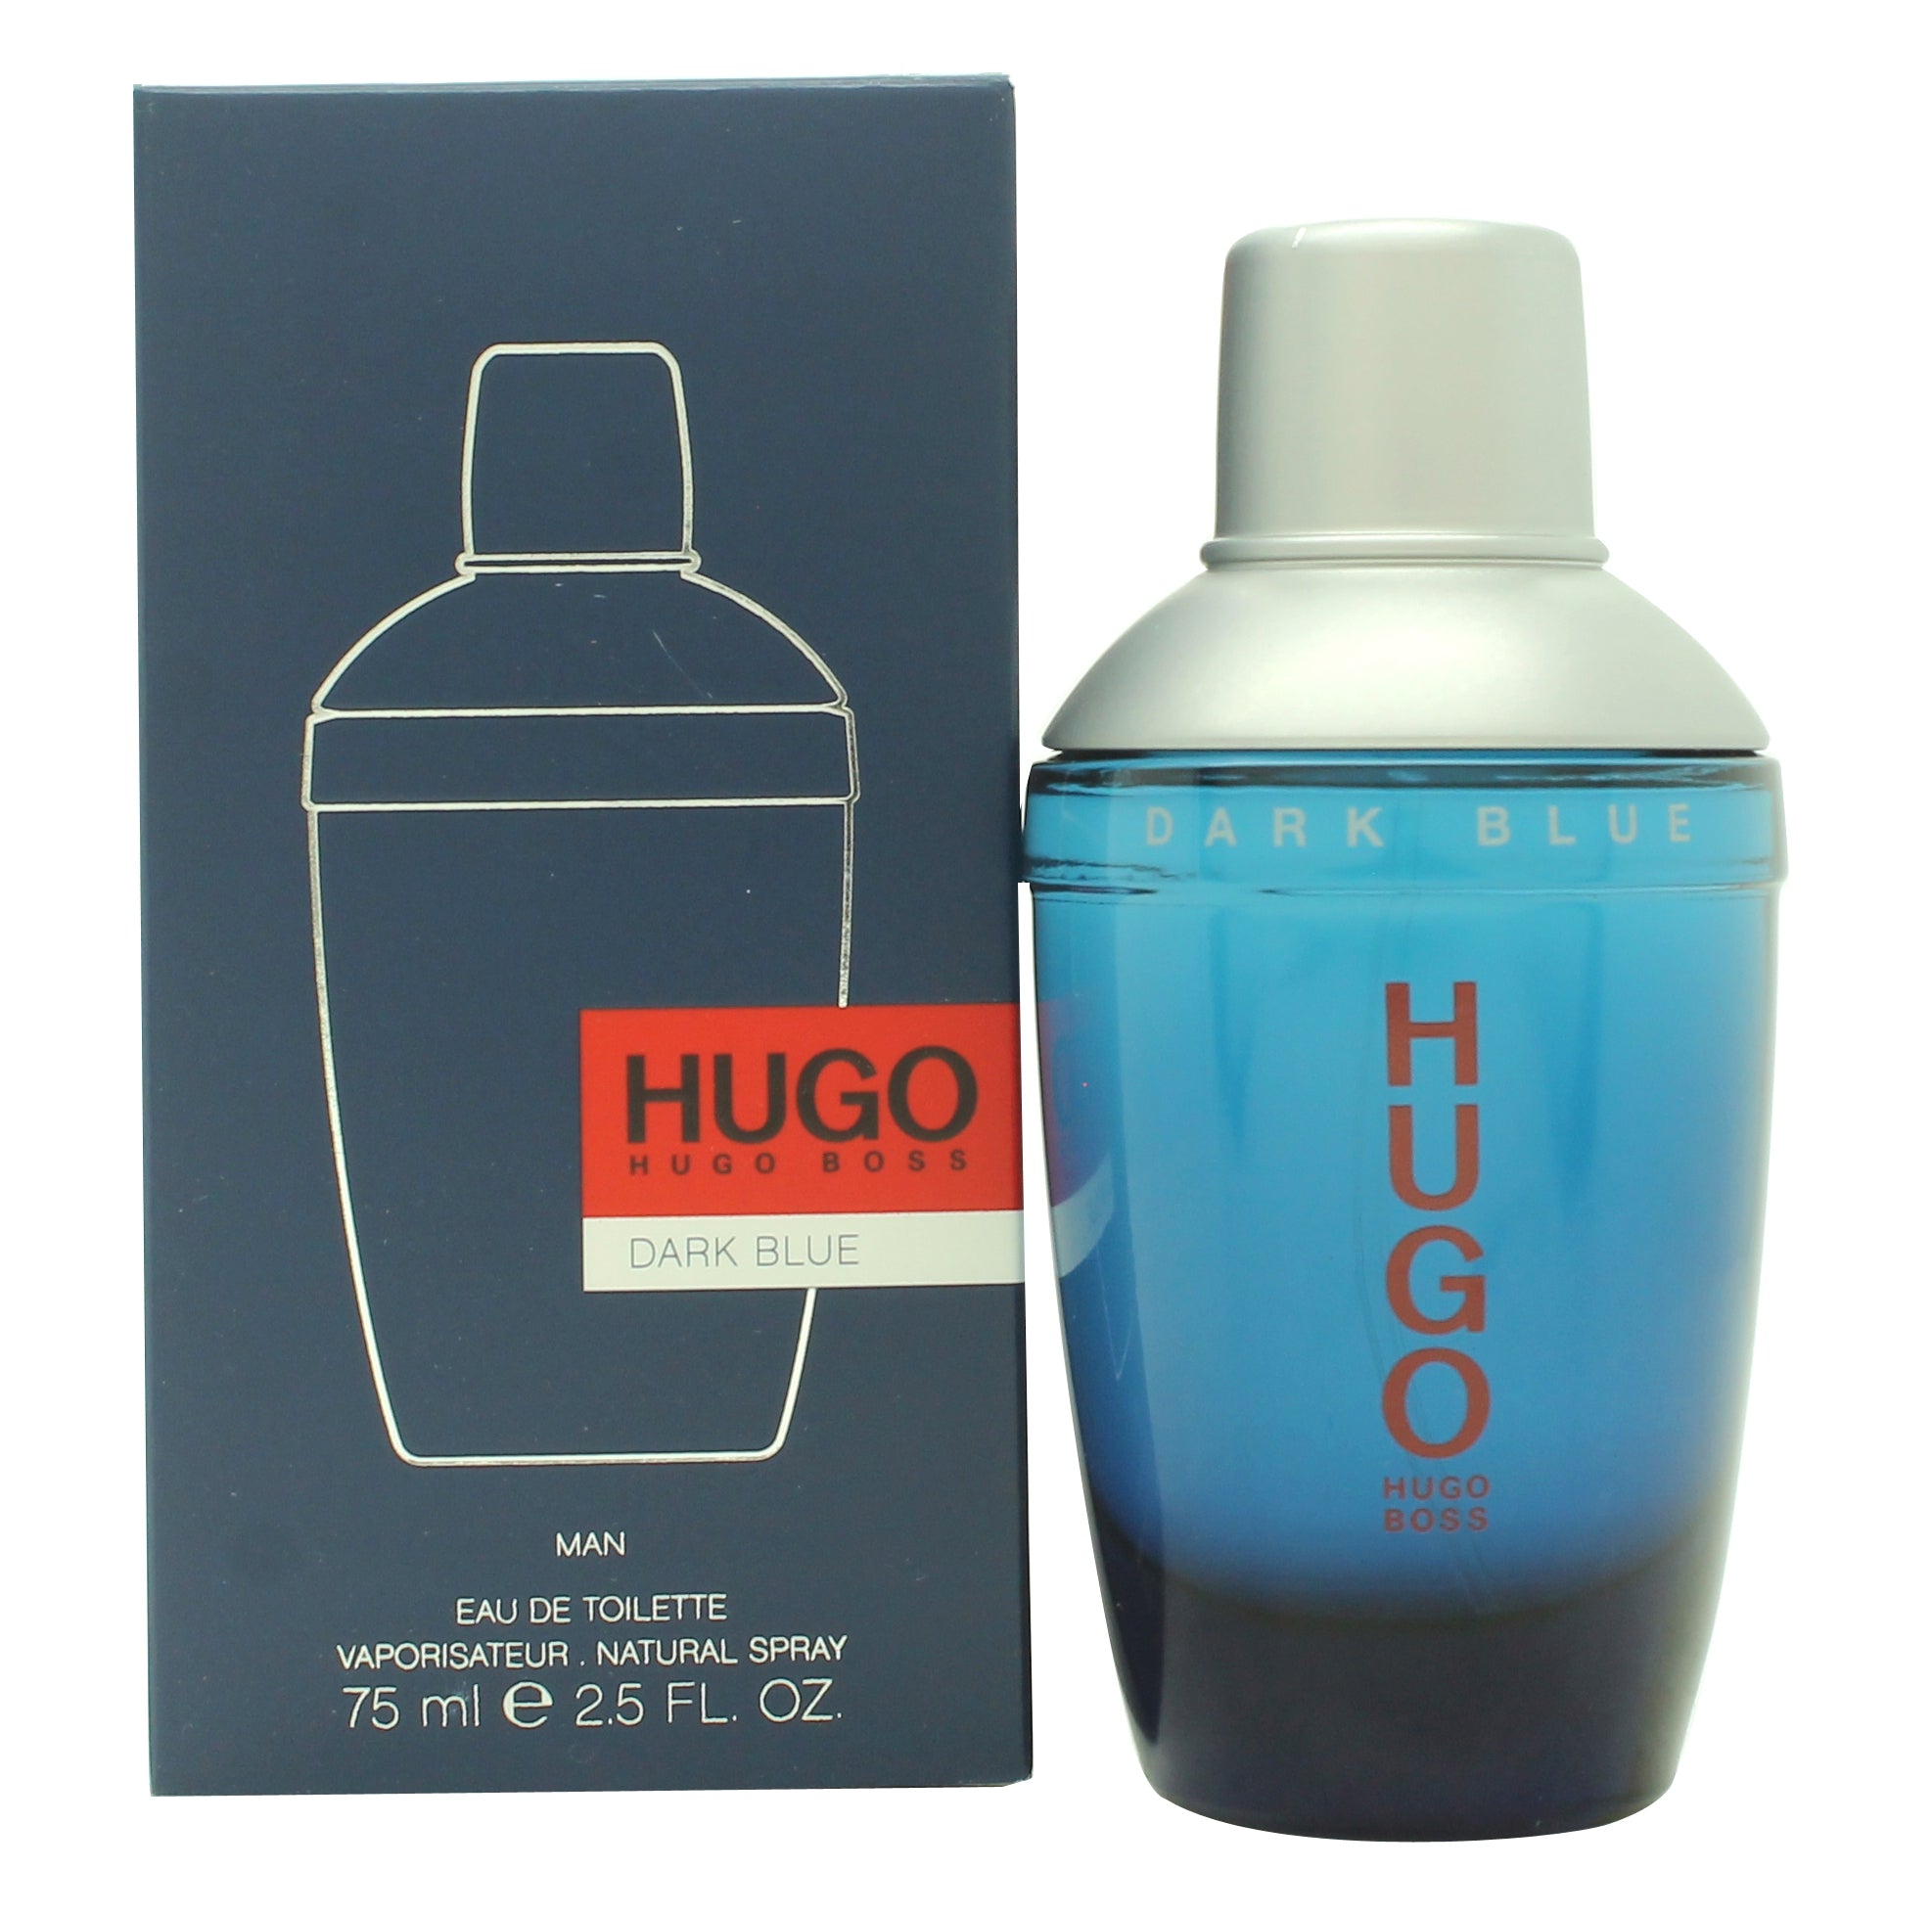 View Hugo Boss Dark Blue Eau de Toilette 75ml Spray information